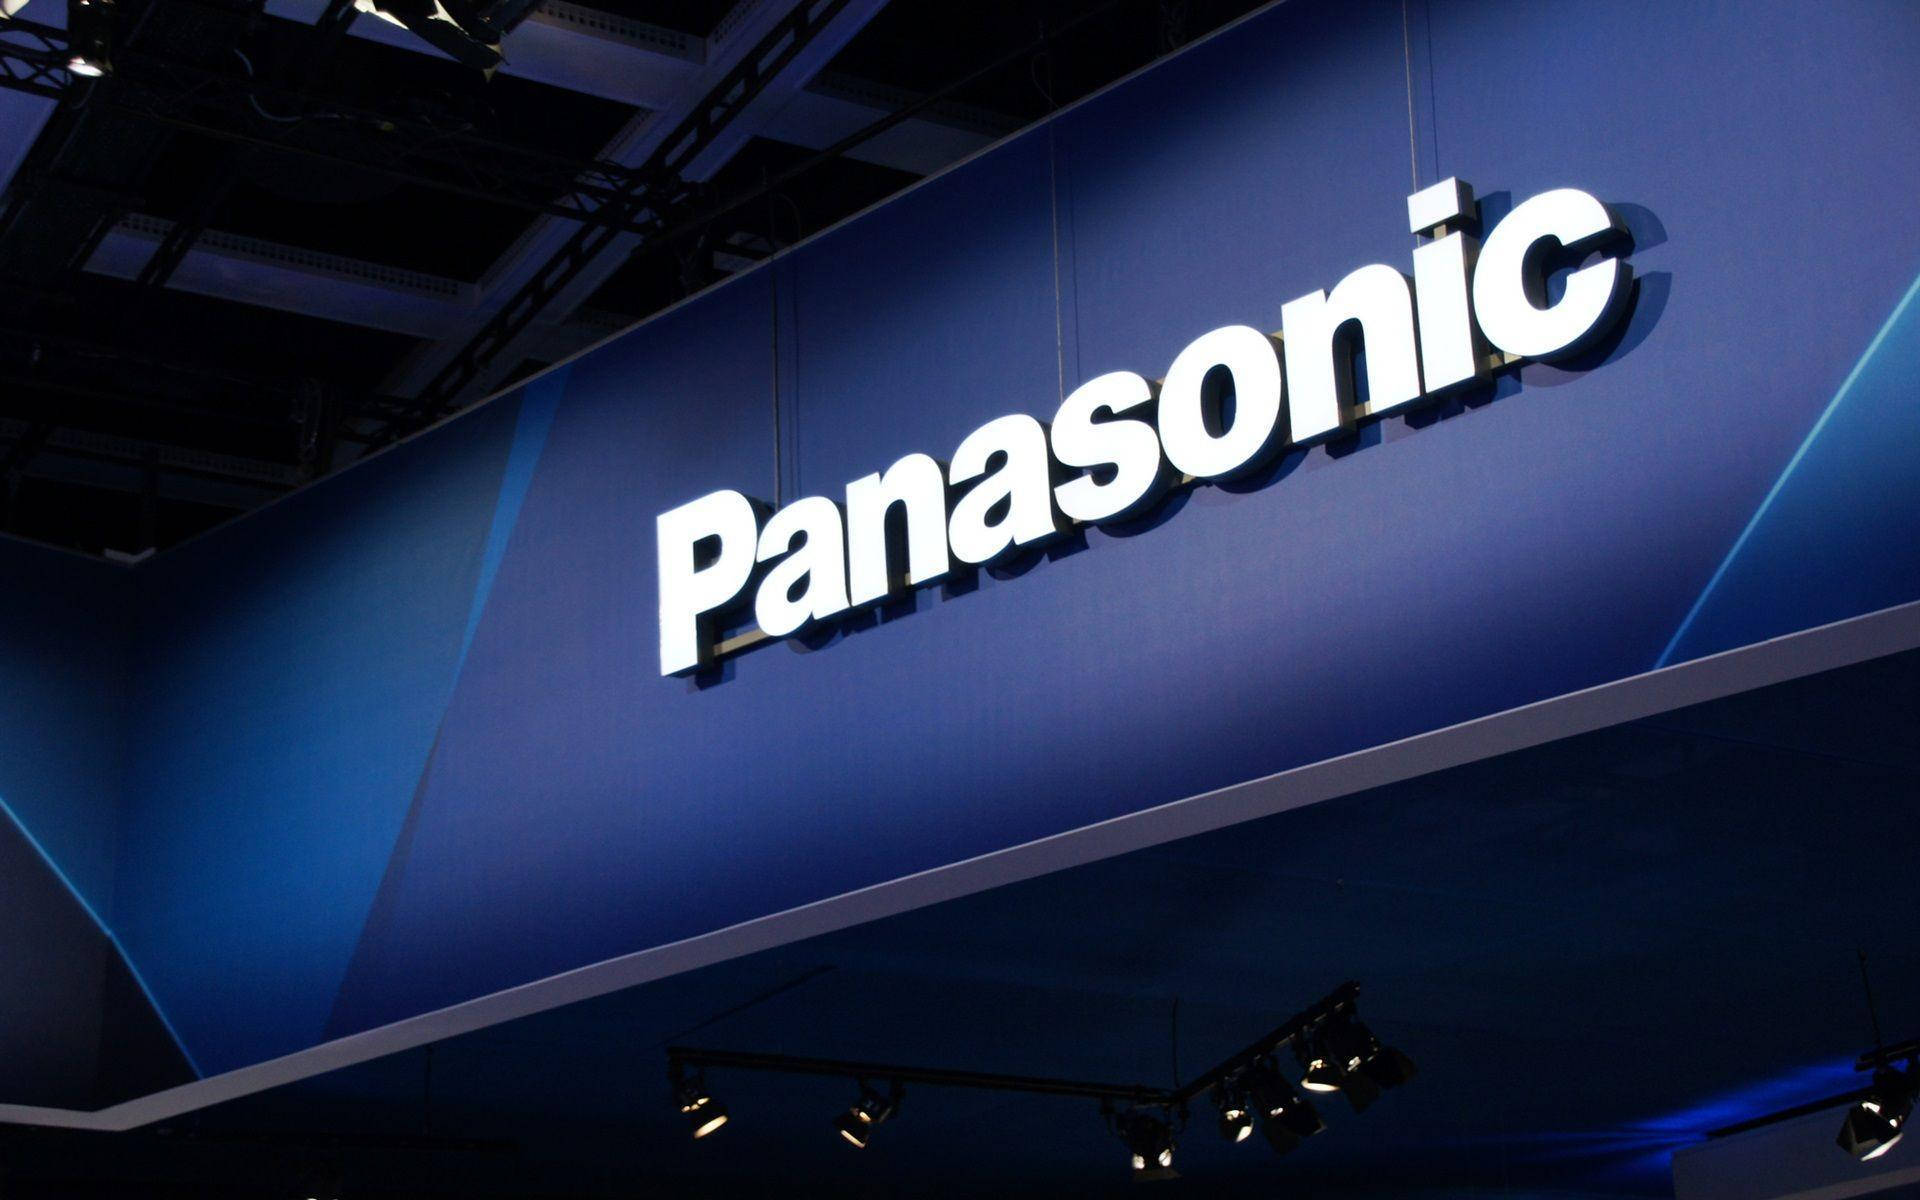 Panasonic Facade In Blue Wallpaper